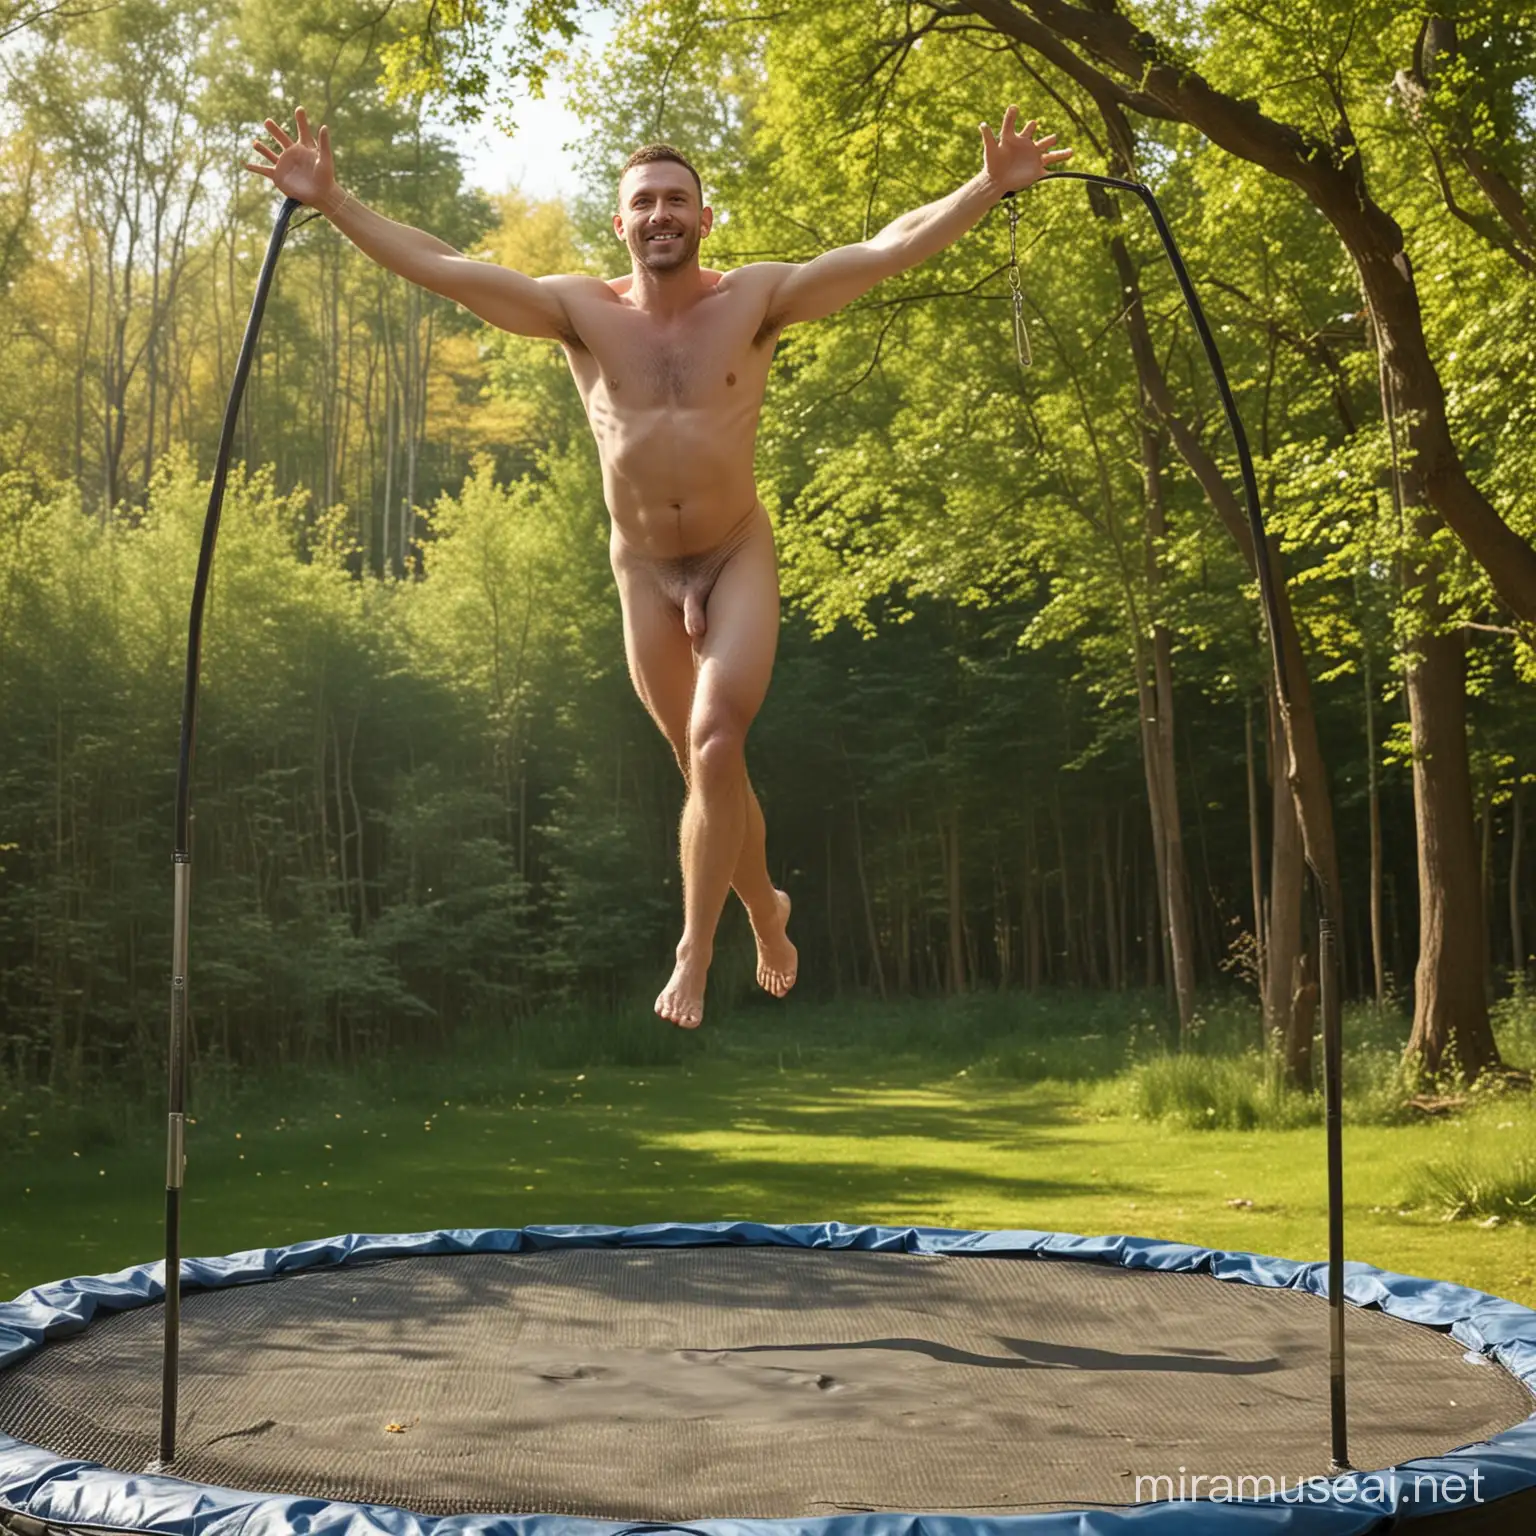 Man Enjoying Outdoor Fun on Trampoline in Natural Setting